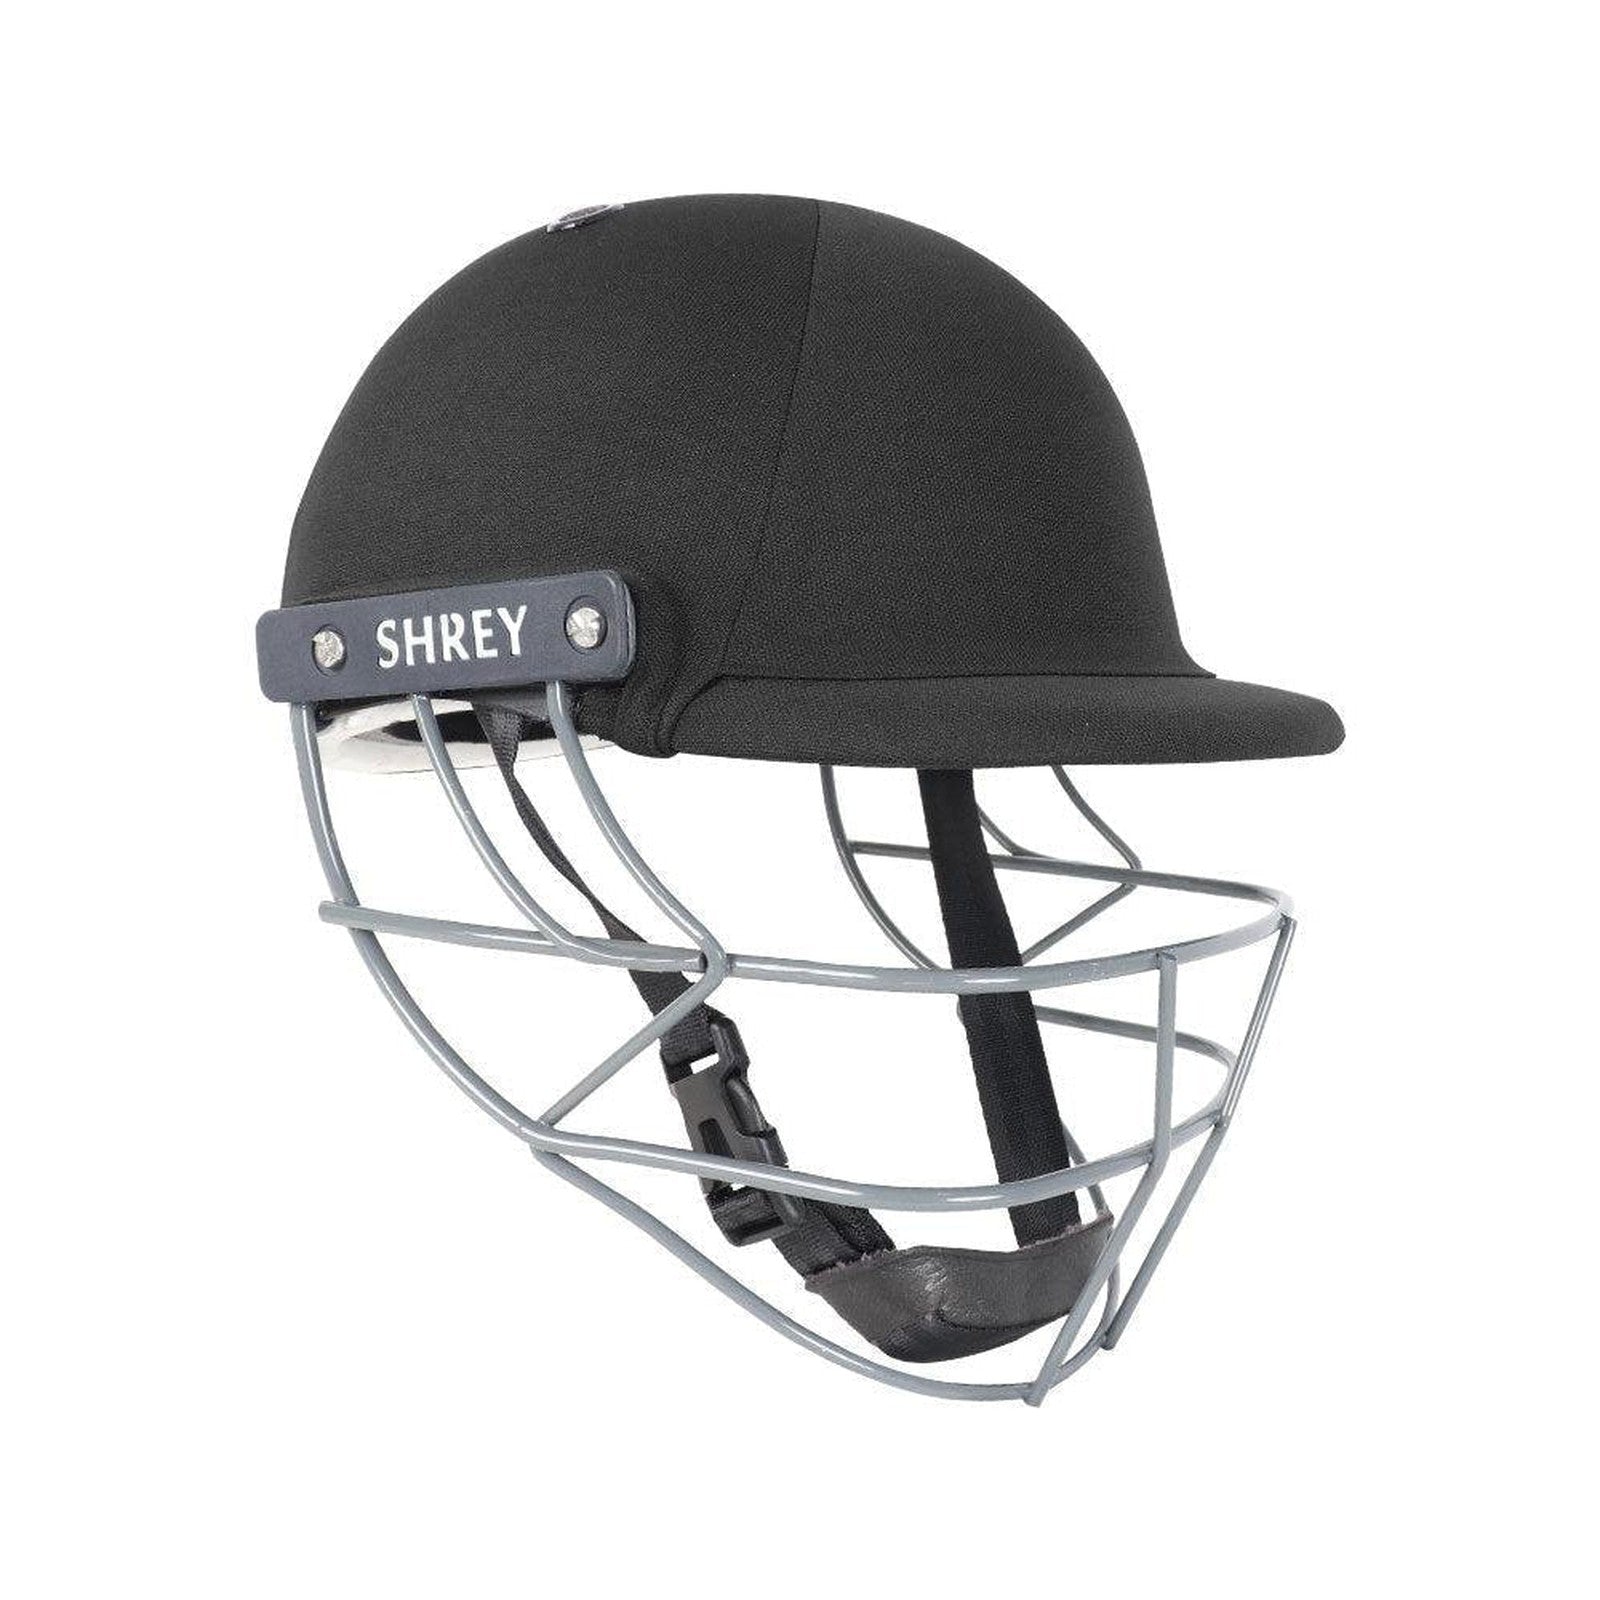 Shrey Performance 2.0 Cricket Helmet With Mild Steel - Black Junior